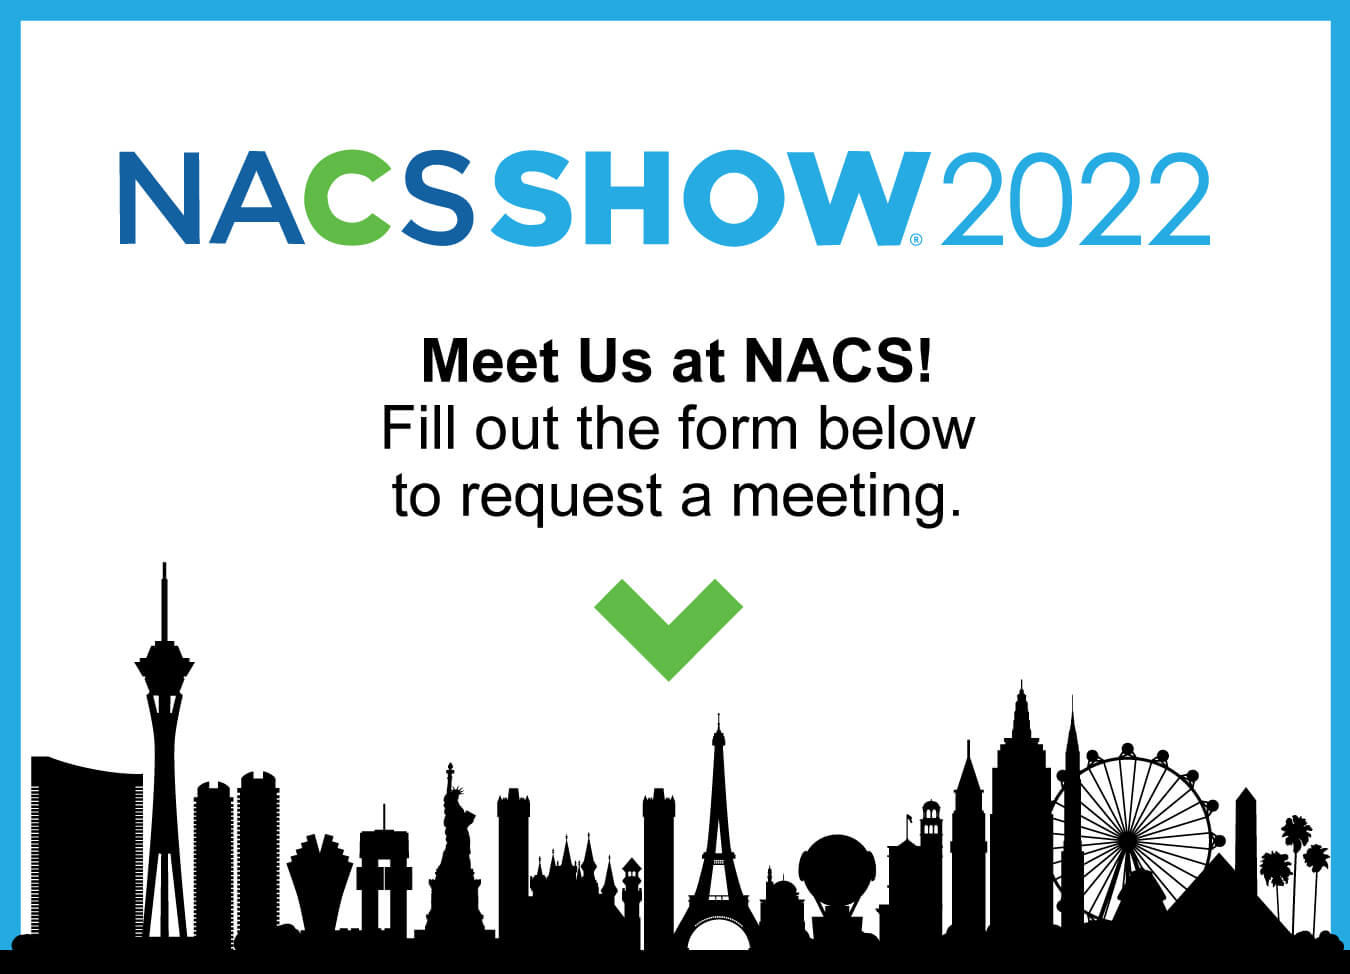 NACS Show 2022 PDI Technologies, Inc.